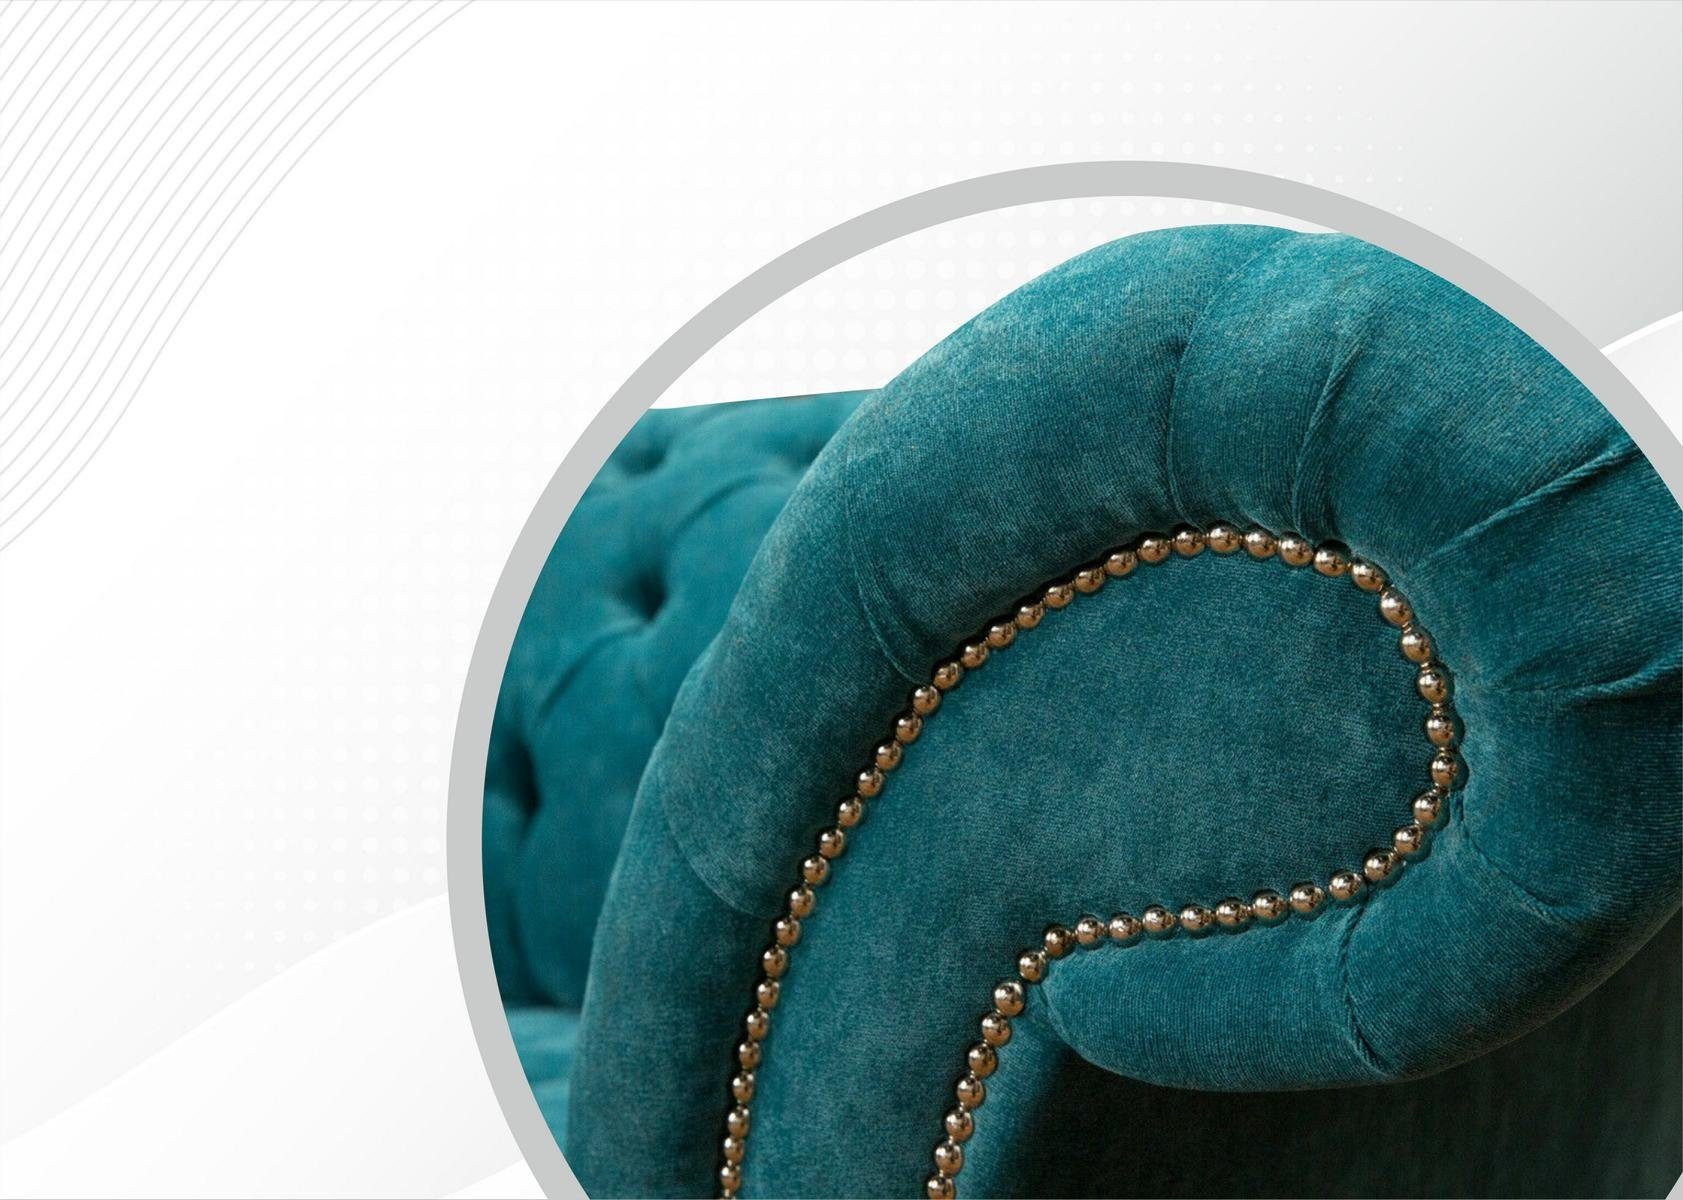 Textil Klassischer JVmoebel in Chesterfield Polster Made 3 Turkis Europe Sitzer, Sofa Couch Sofas